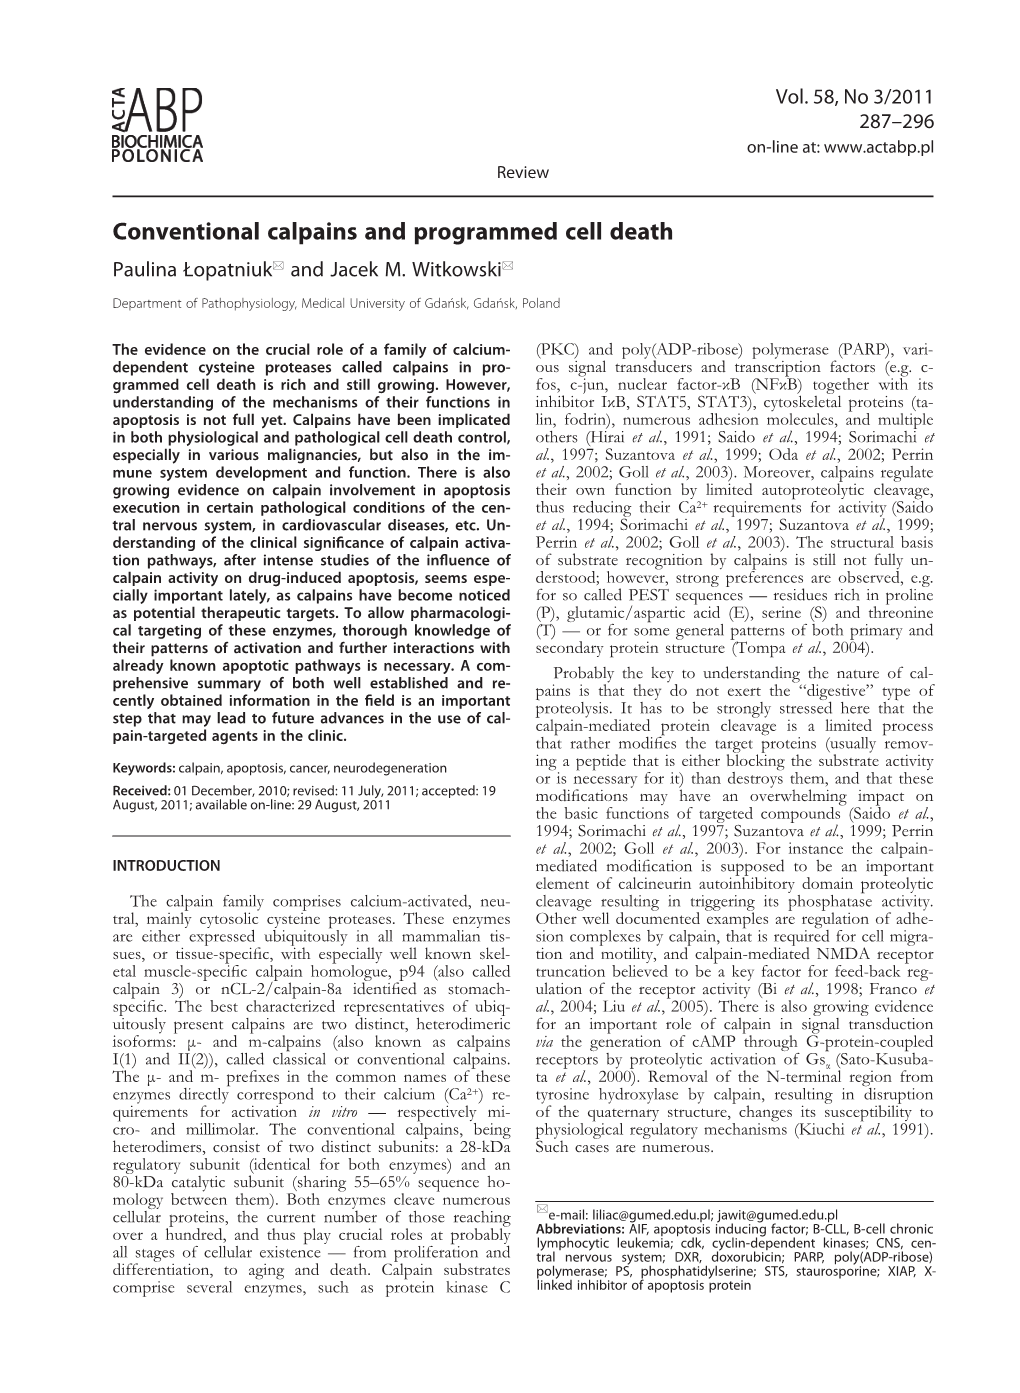 Conventional Calpains and Programmed Cell Death Paulina Łopatniuk* and Jacek M